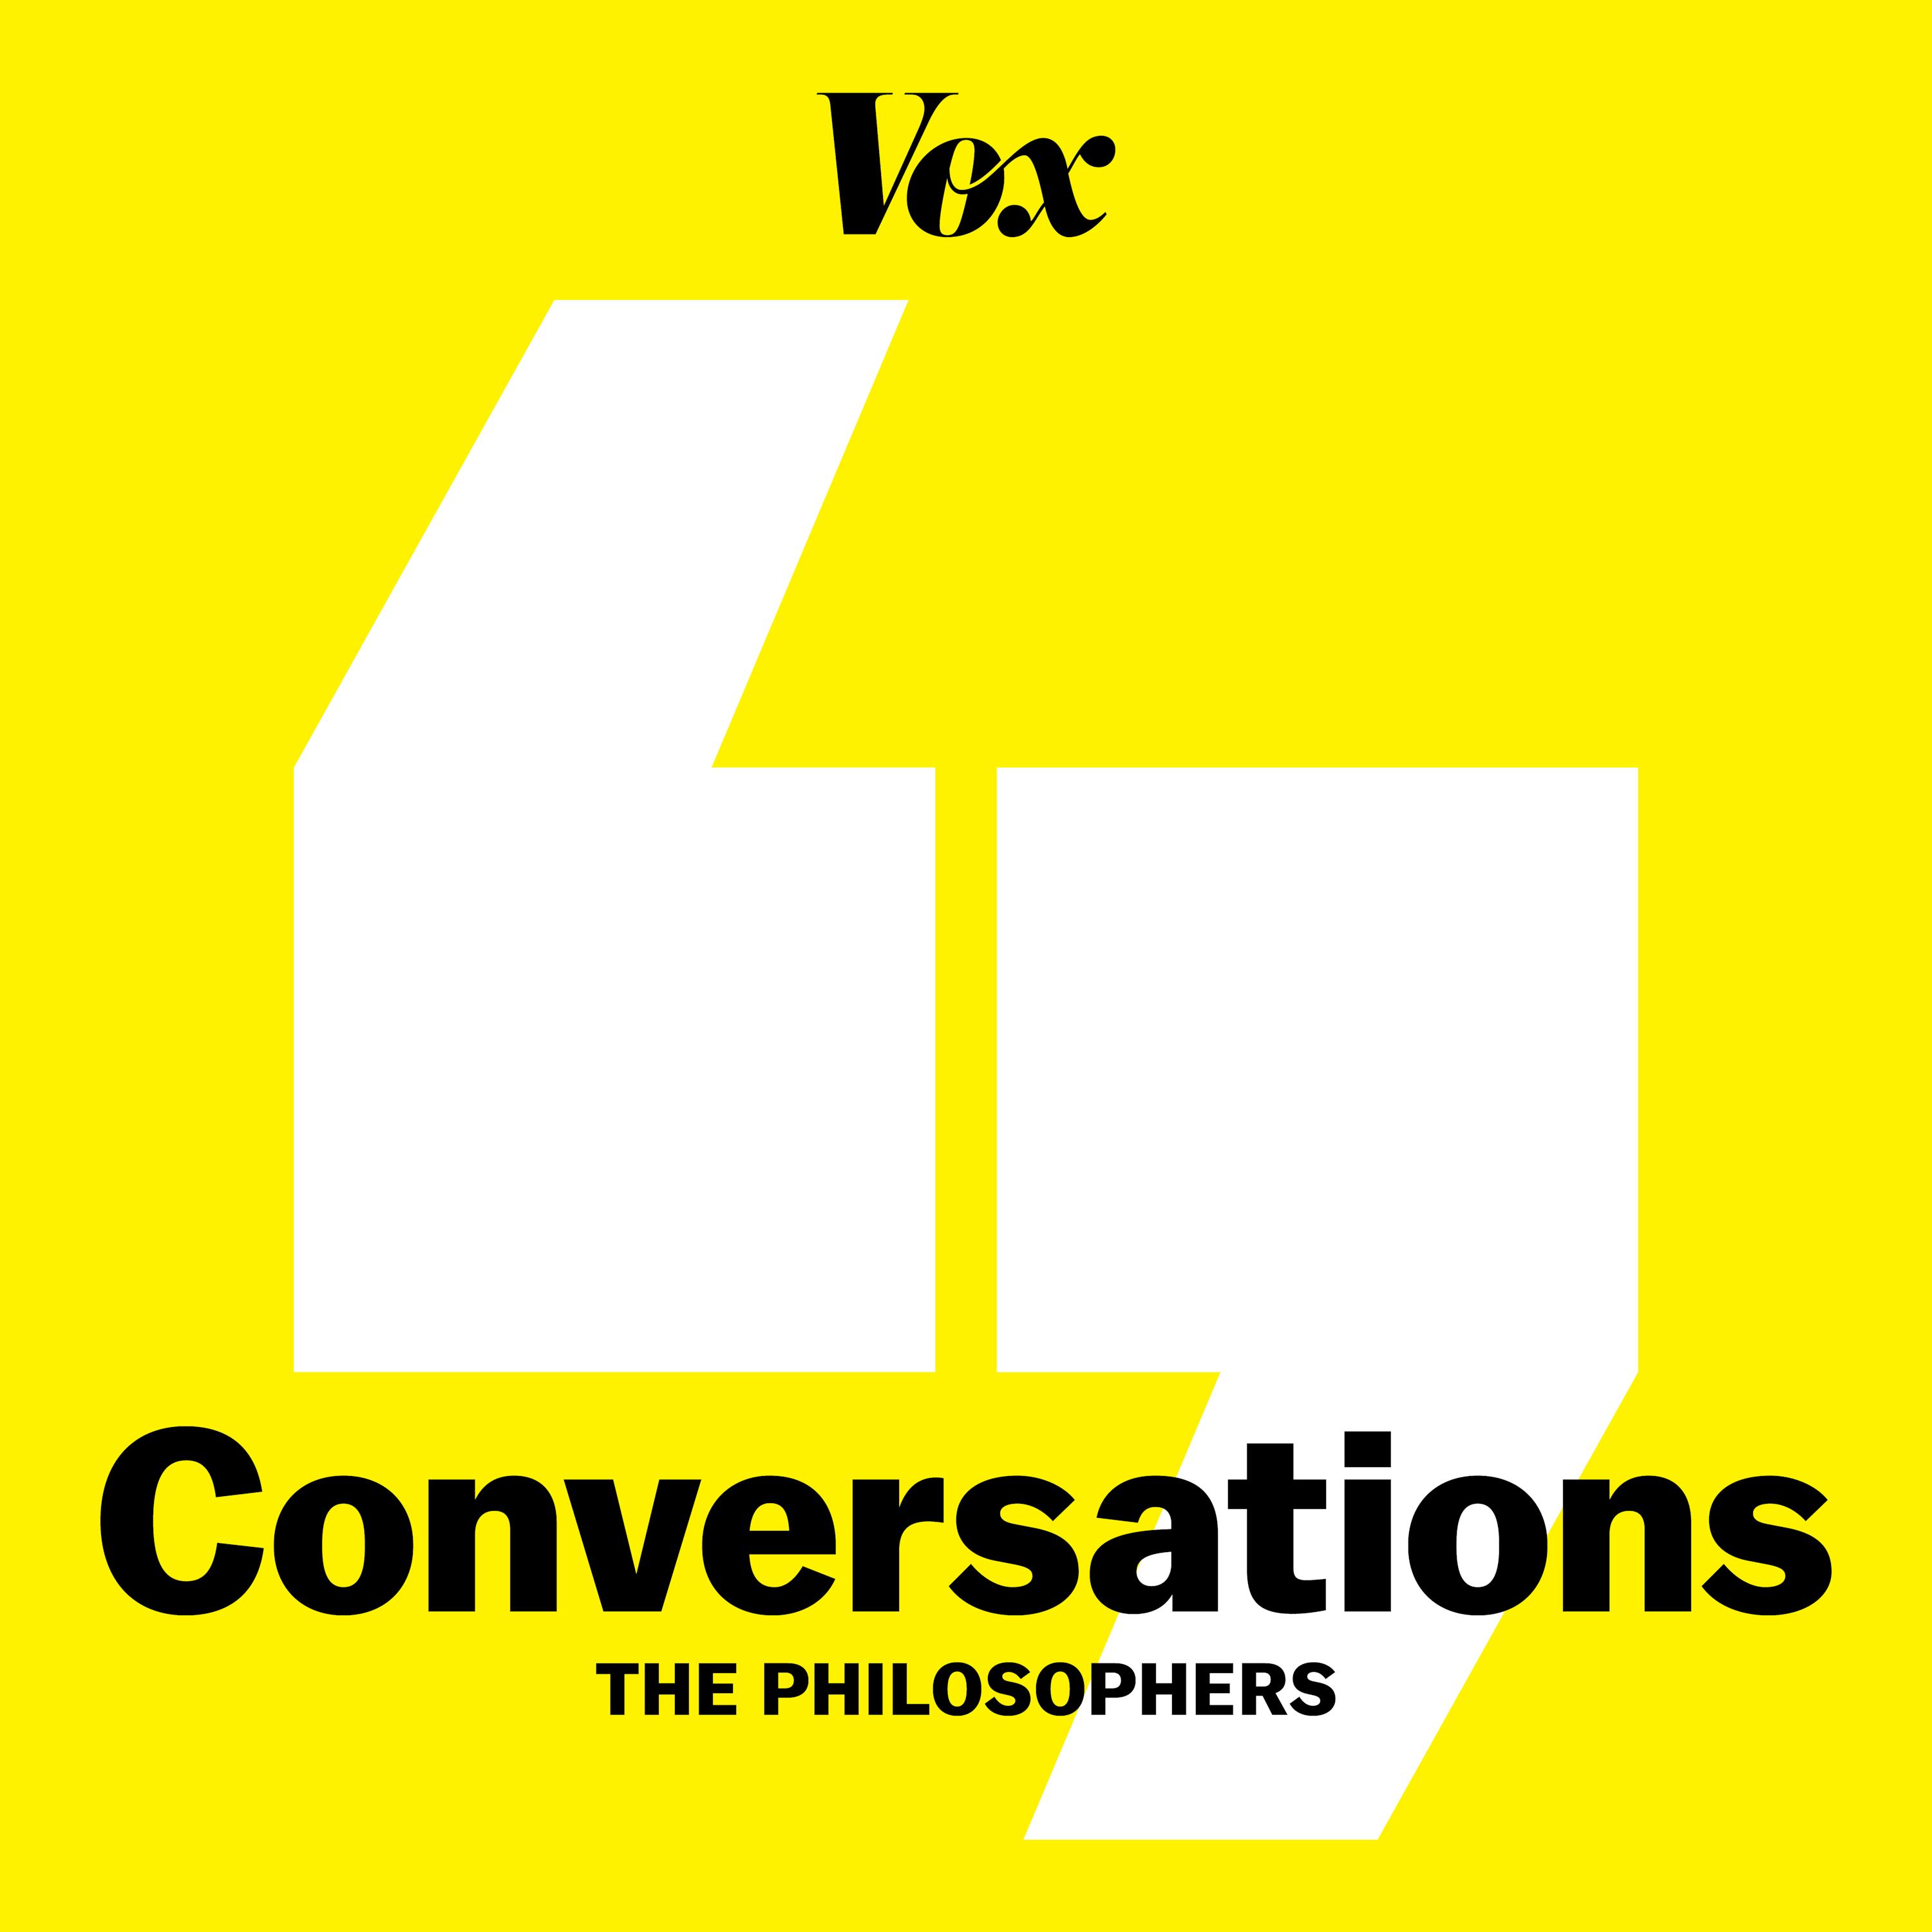 The Philosophers: America's philosophy, with Cornel West